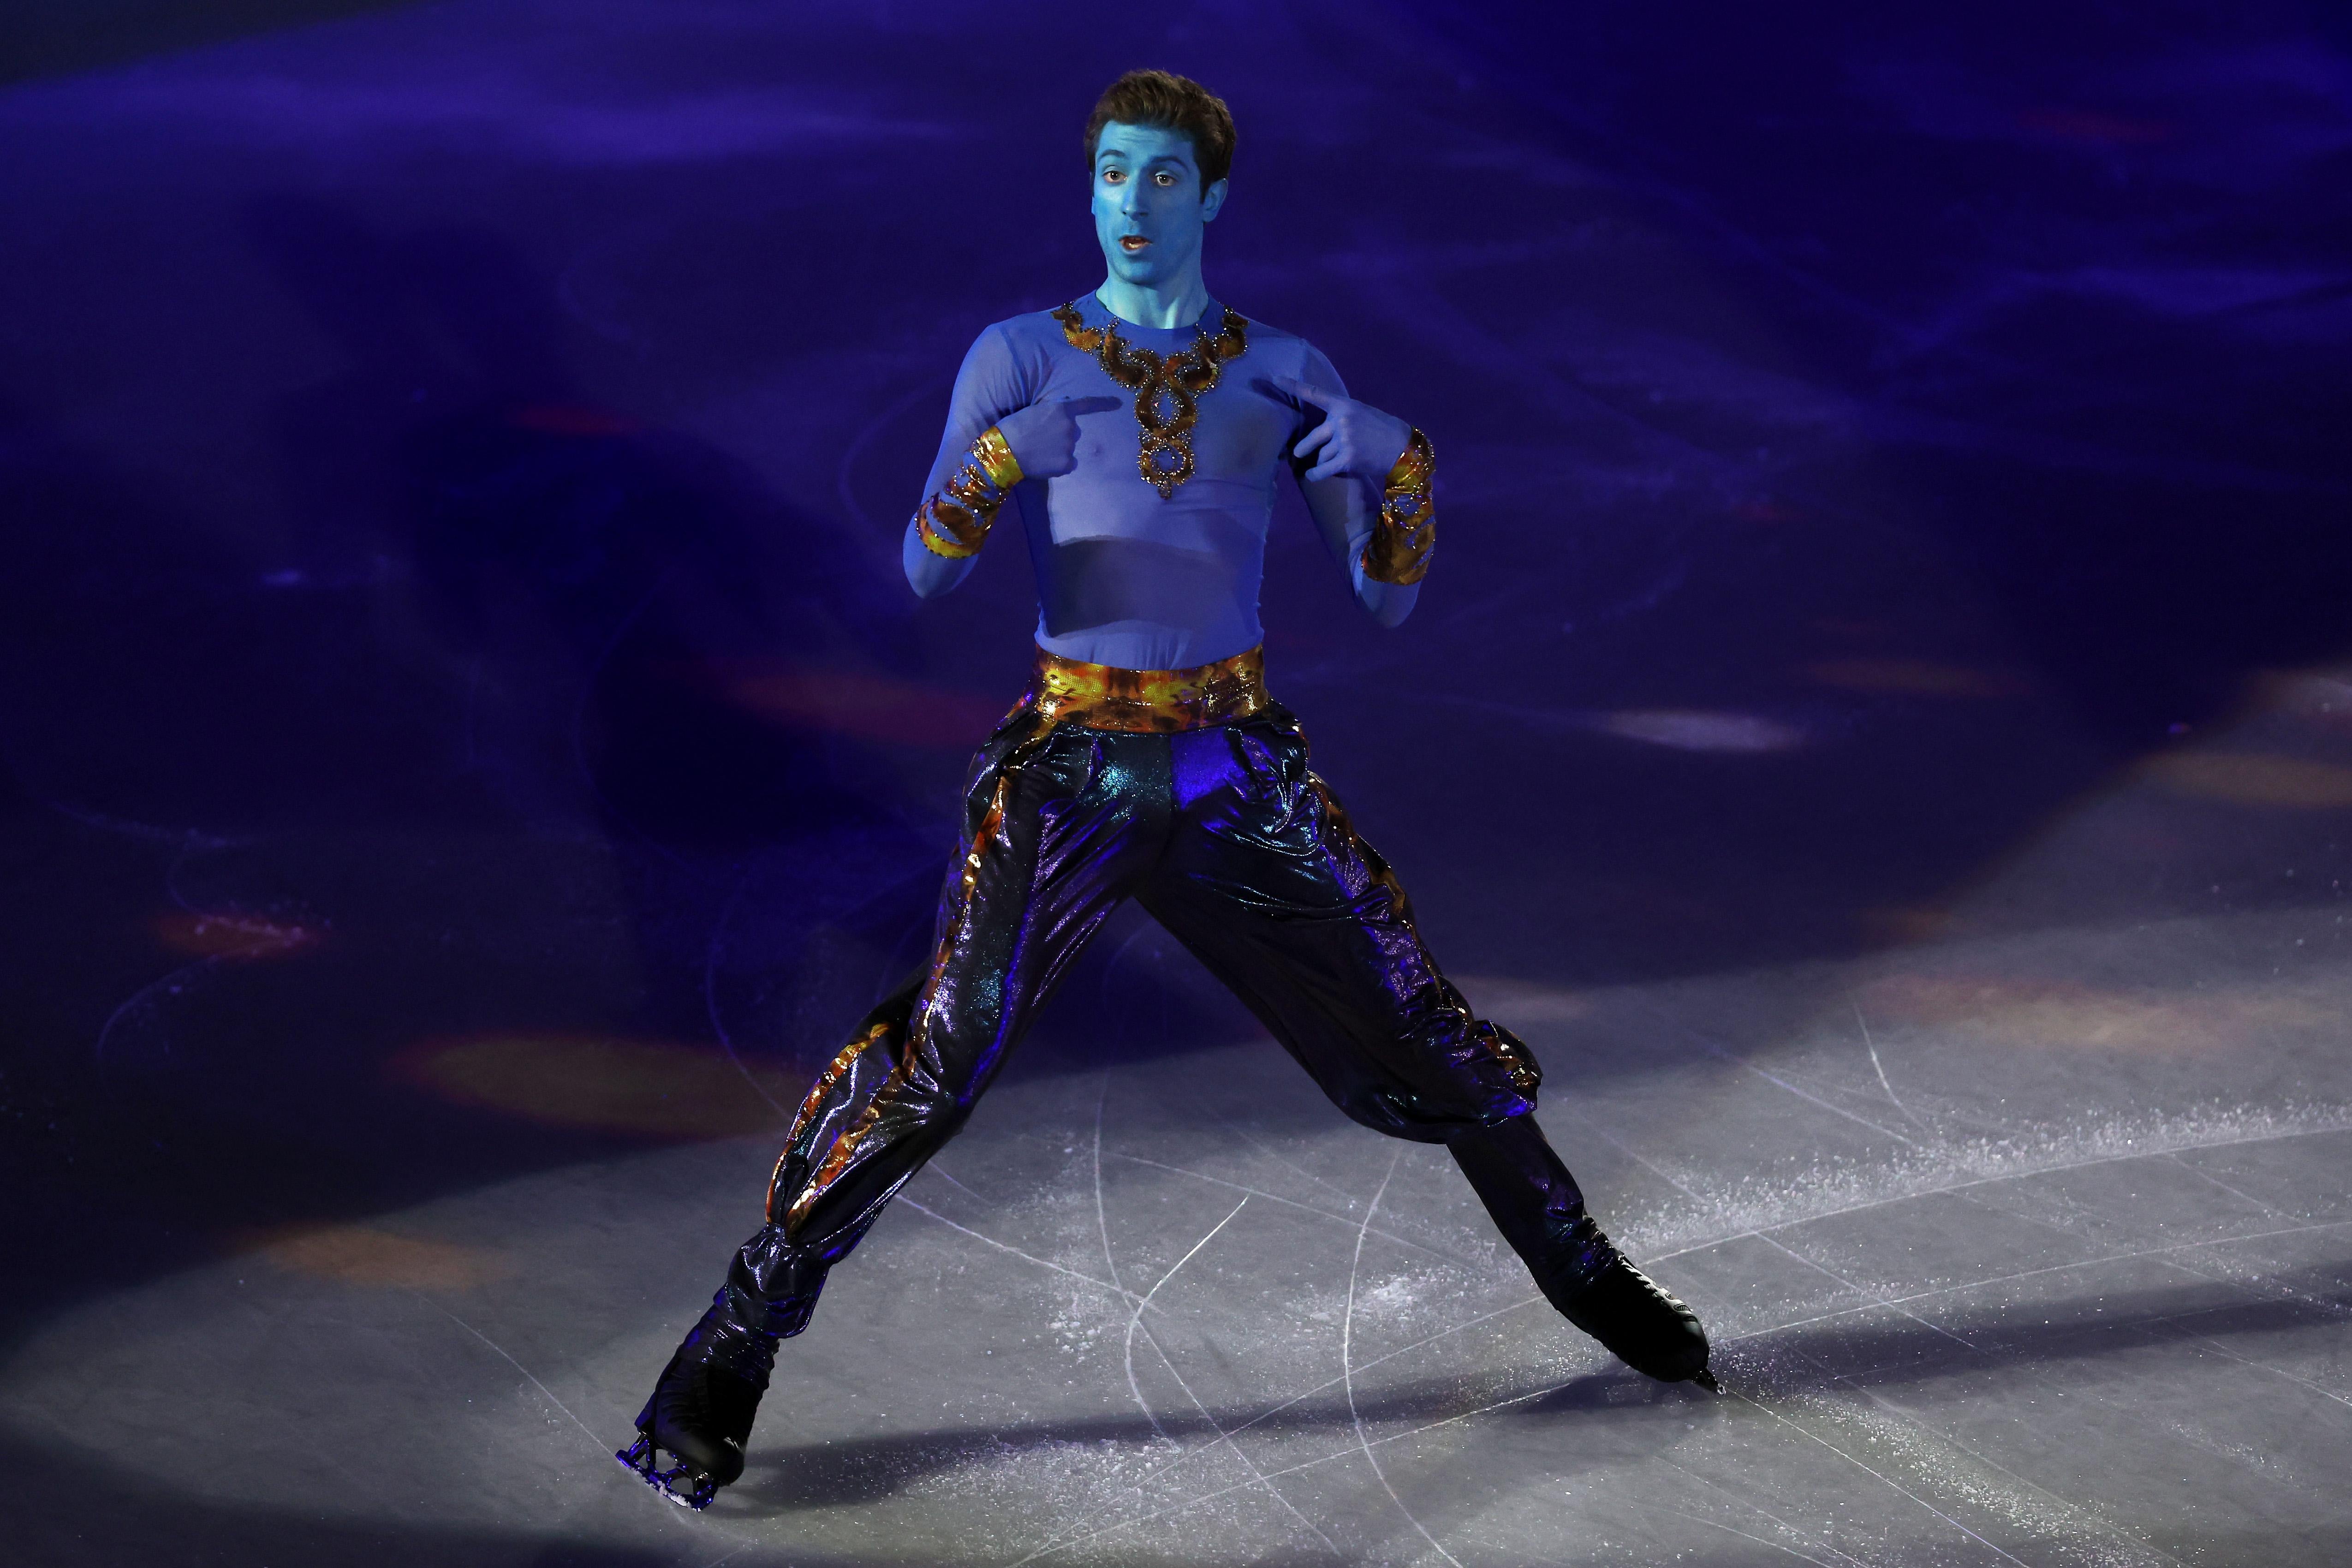 Kvitelashvili dressed as the blue genie from Aladdin skating on the ice